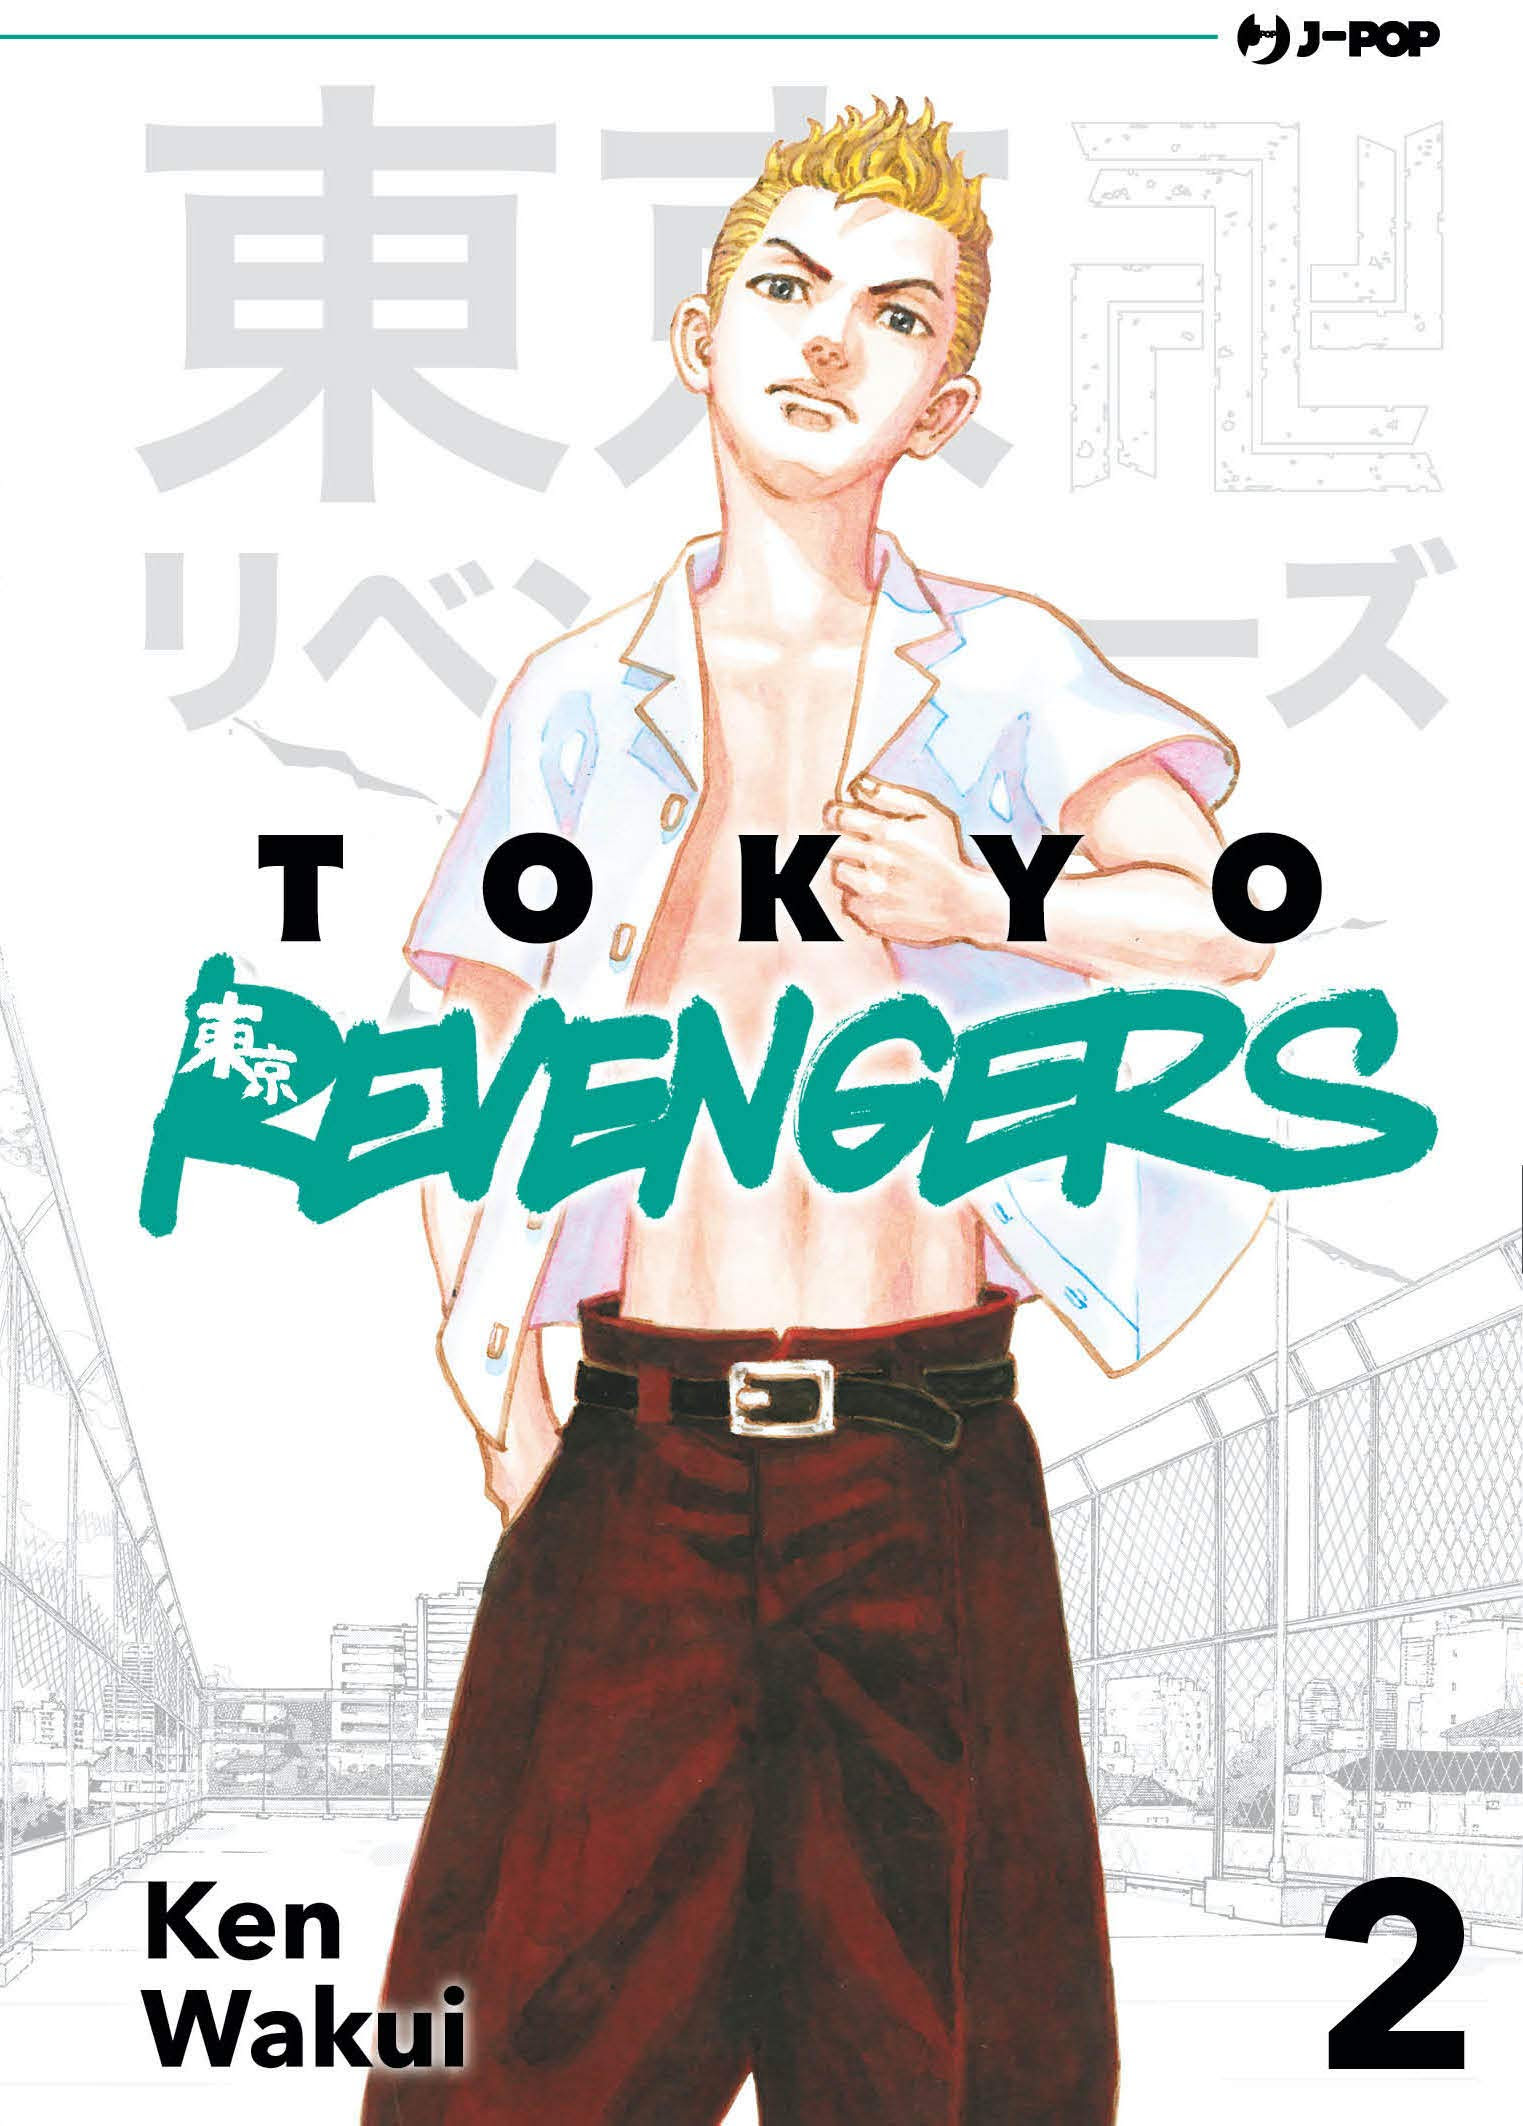 Tokyo Revengers, Vol. 2 in Kindle/PDF/EPUB